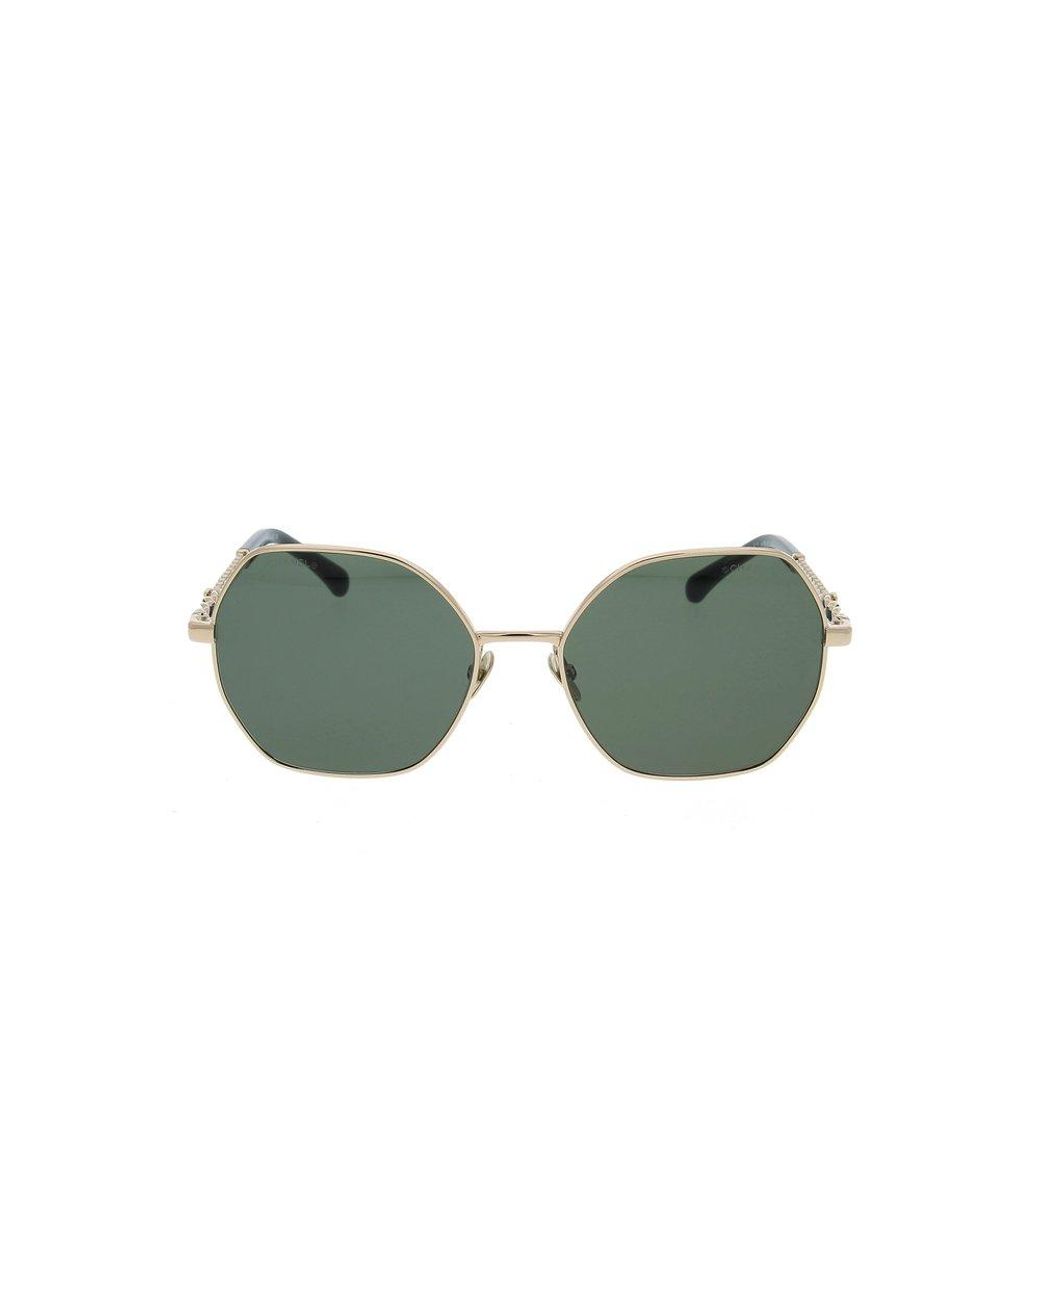 Chanel Square Frame Sunglasses in Green